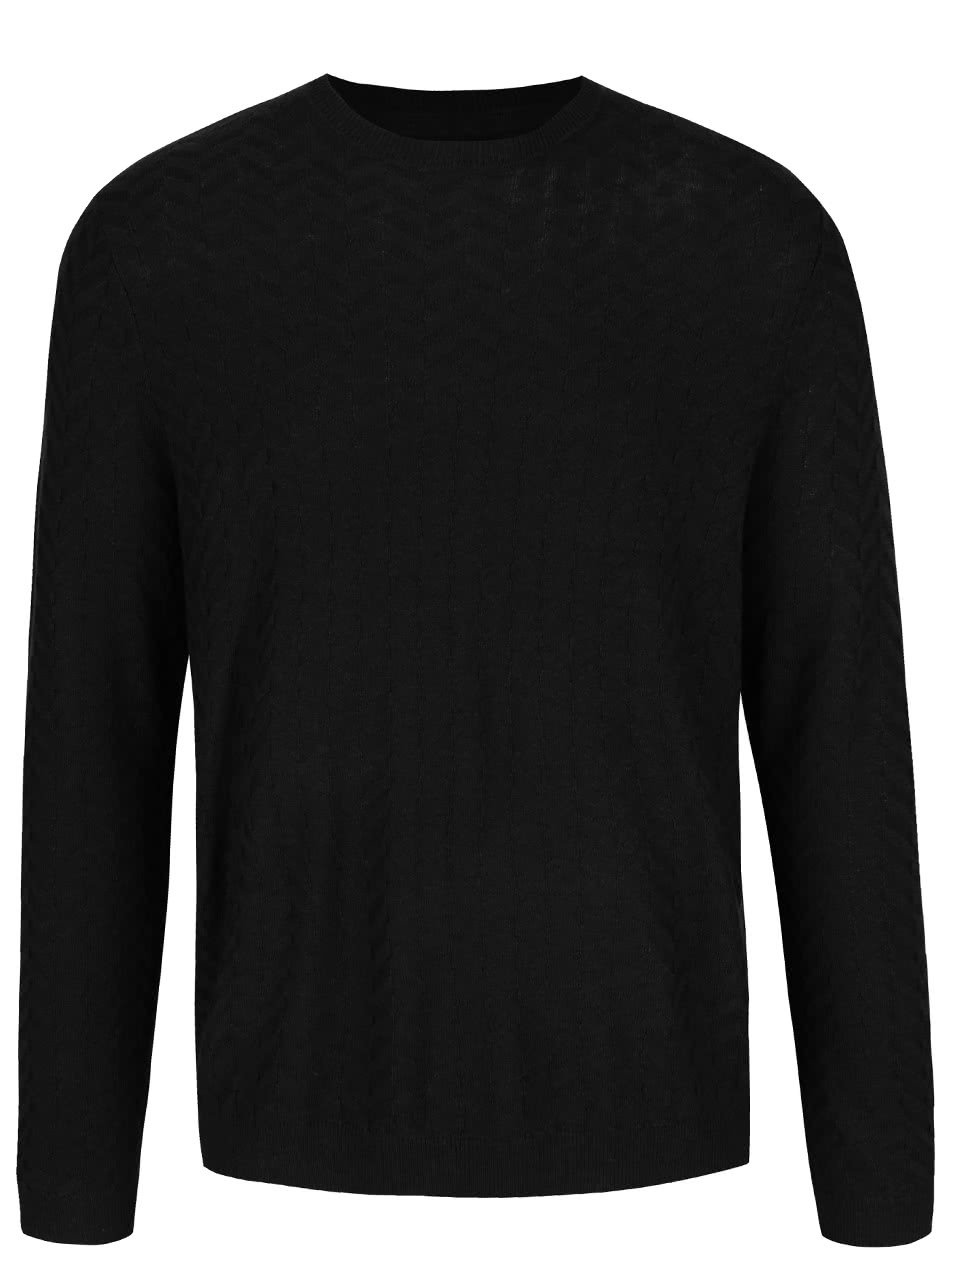 Černý lehký svetr Burton Menswear London